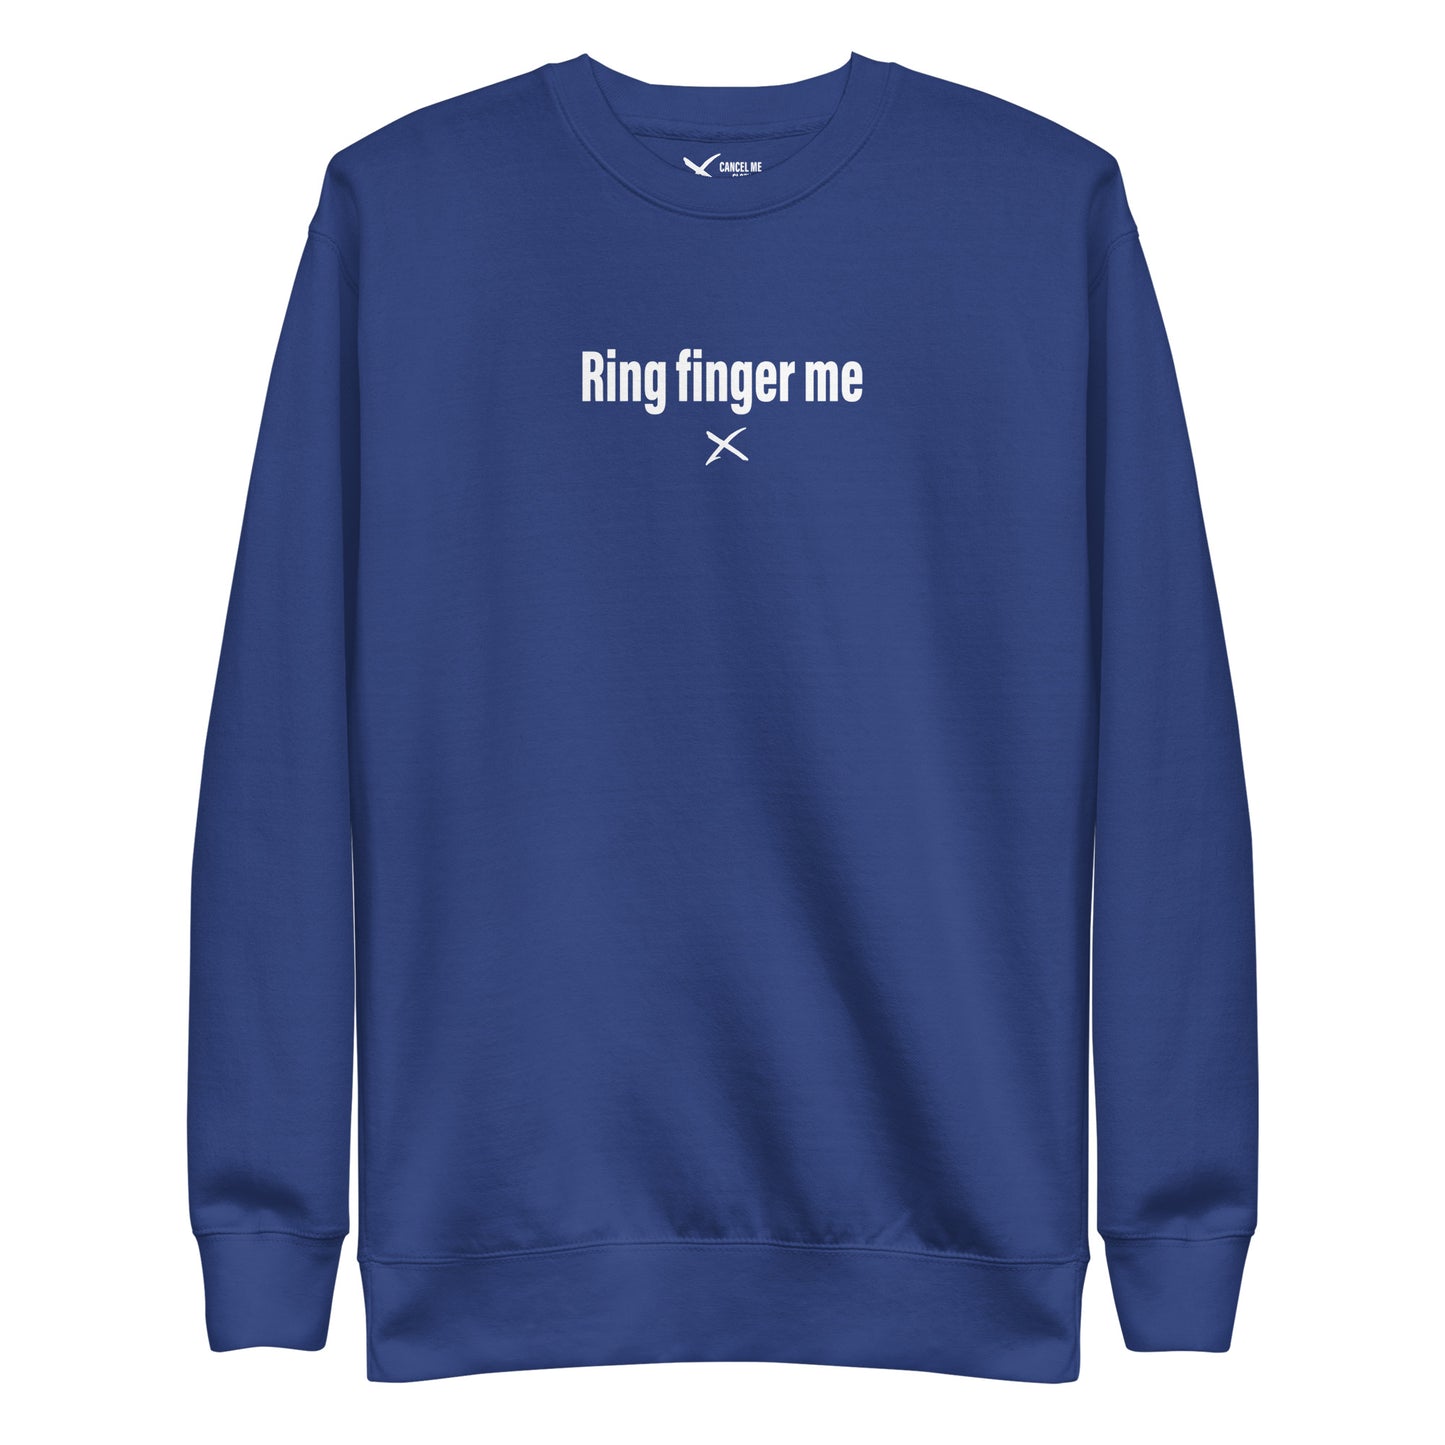 Ring finger me - Sweatshirt